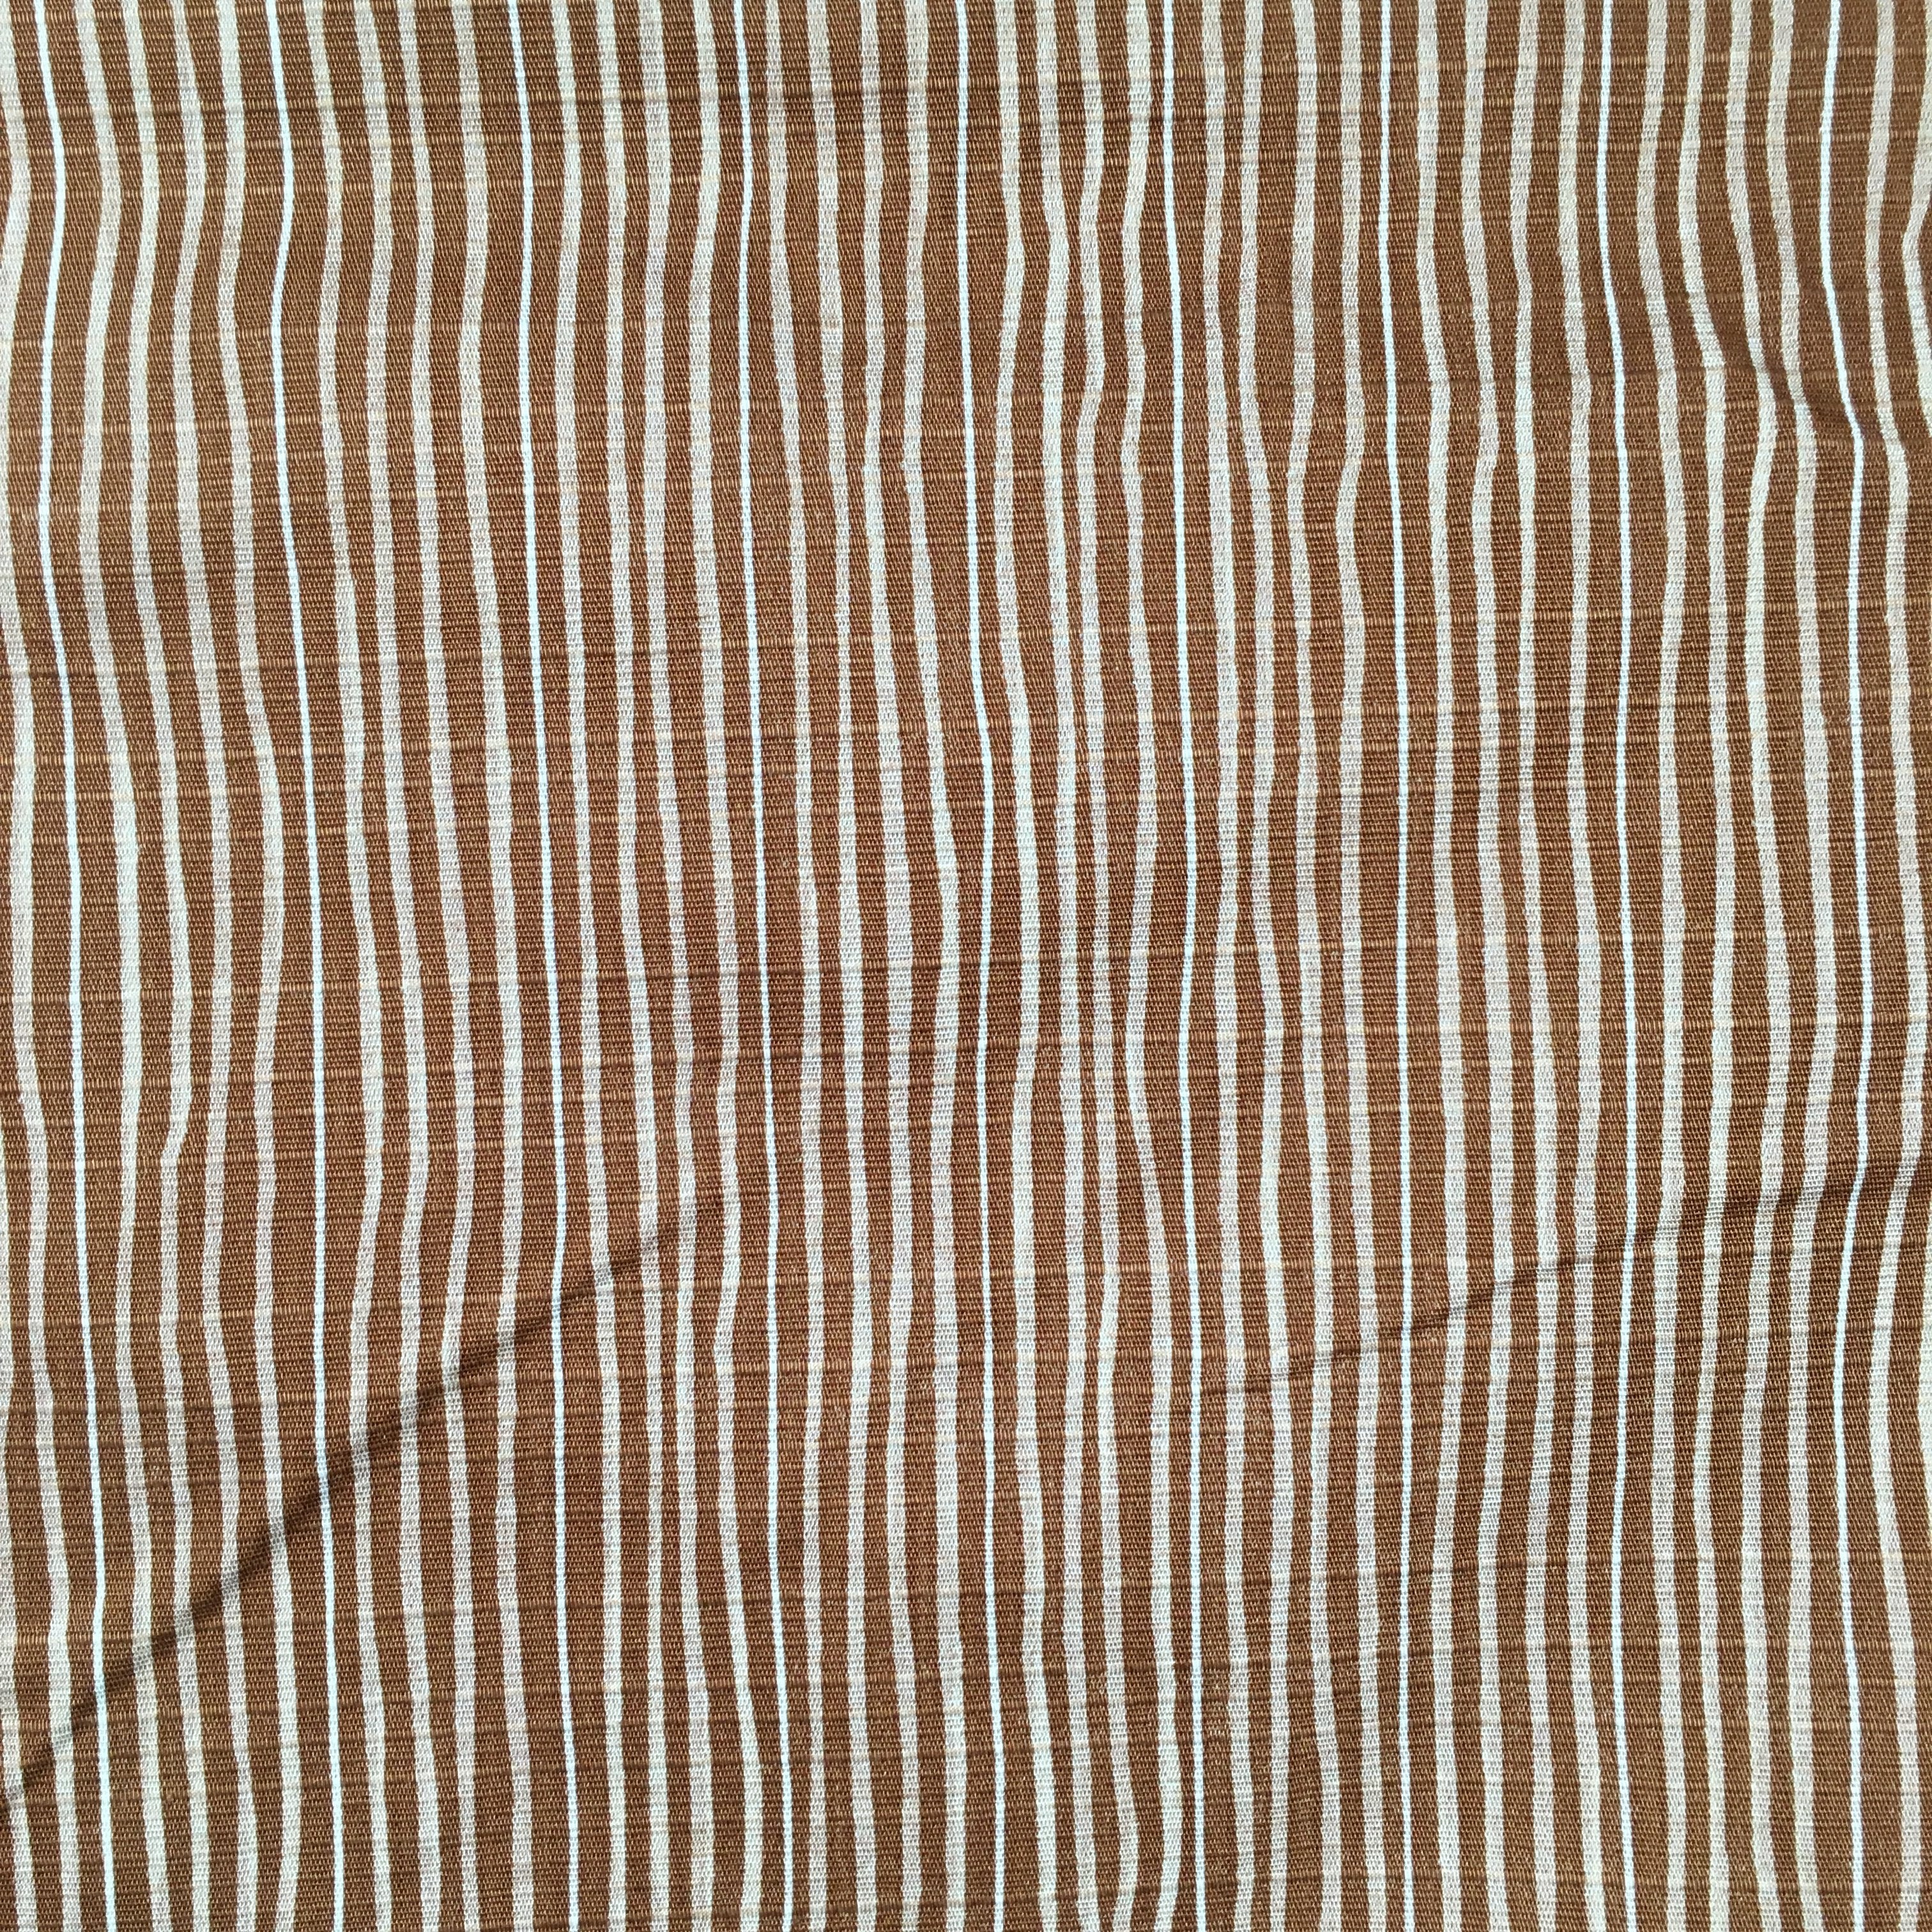 Japanese Wrap Cloth Furoshiki Fabric Cotton Red Brown Reversible FU169